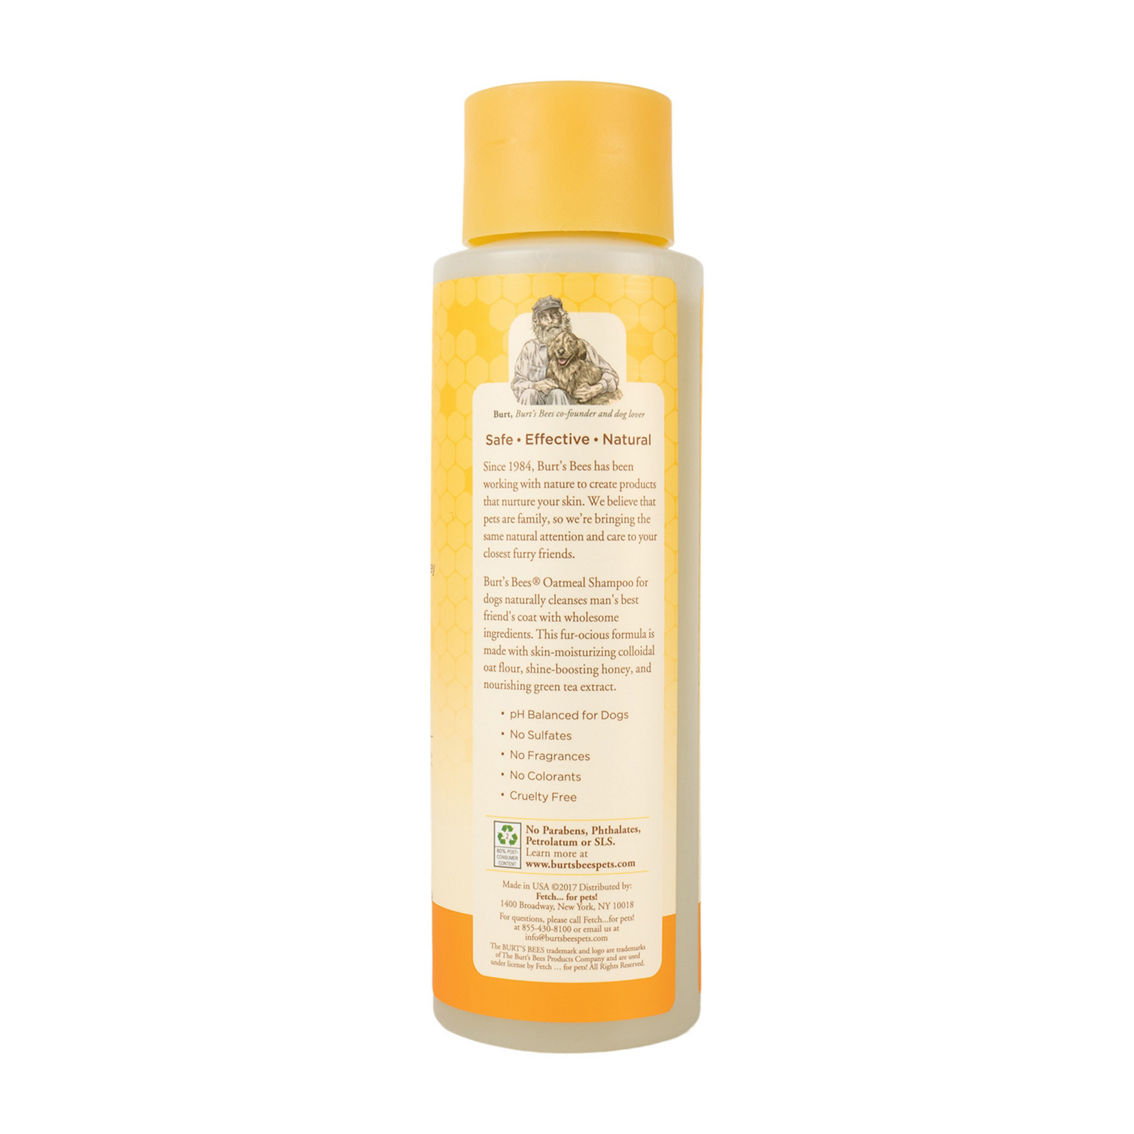 Burts Bees Oatmeal Dog Shampoo with Colloidal Oat Flour and Honey 16 oz. - Image 2 of 8